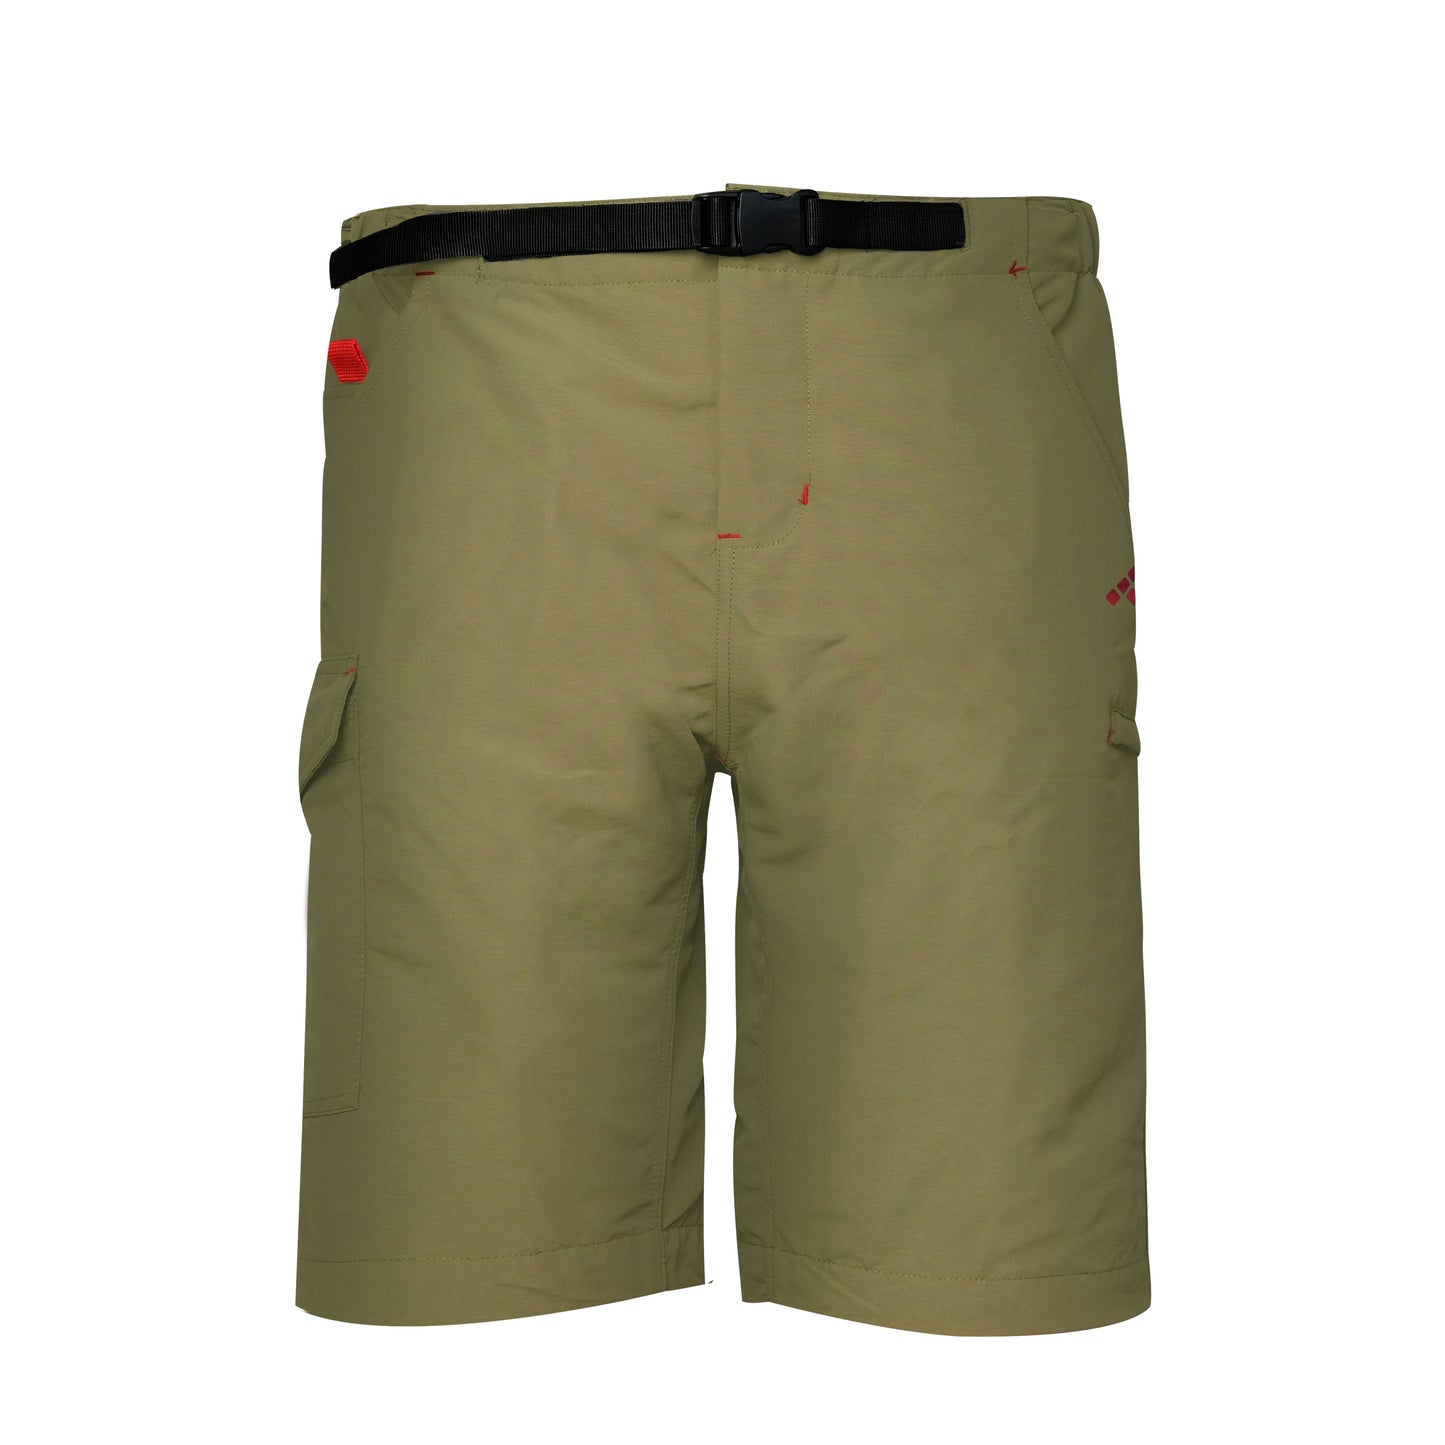 Basekamp Backcountry Technical Hiking Shorts